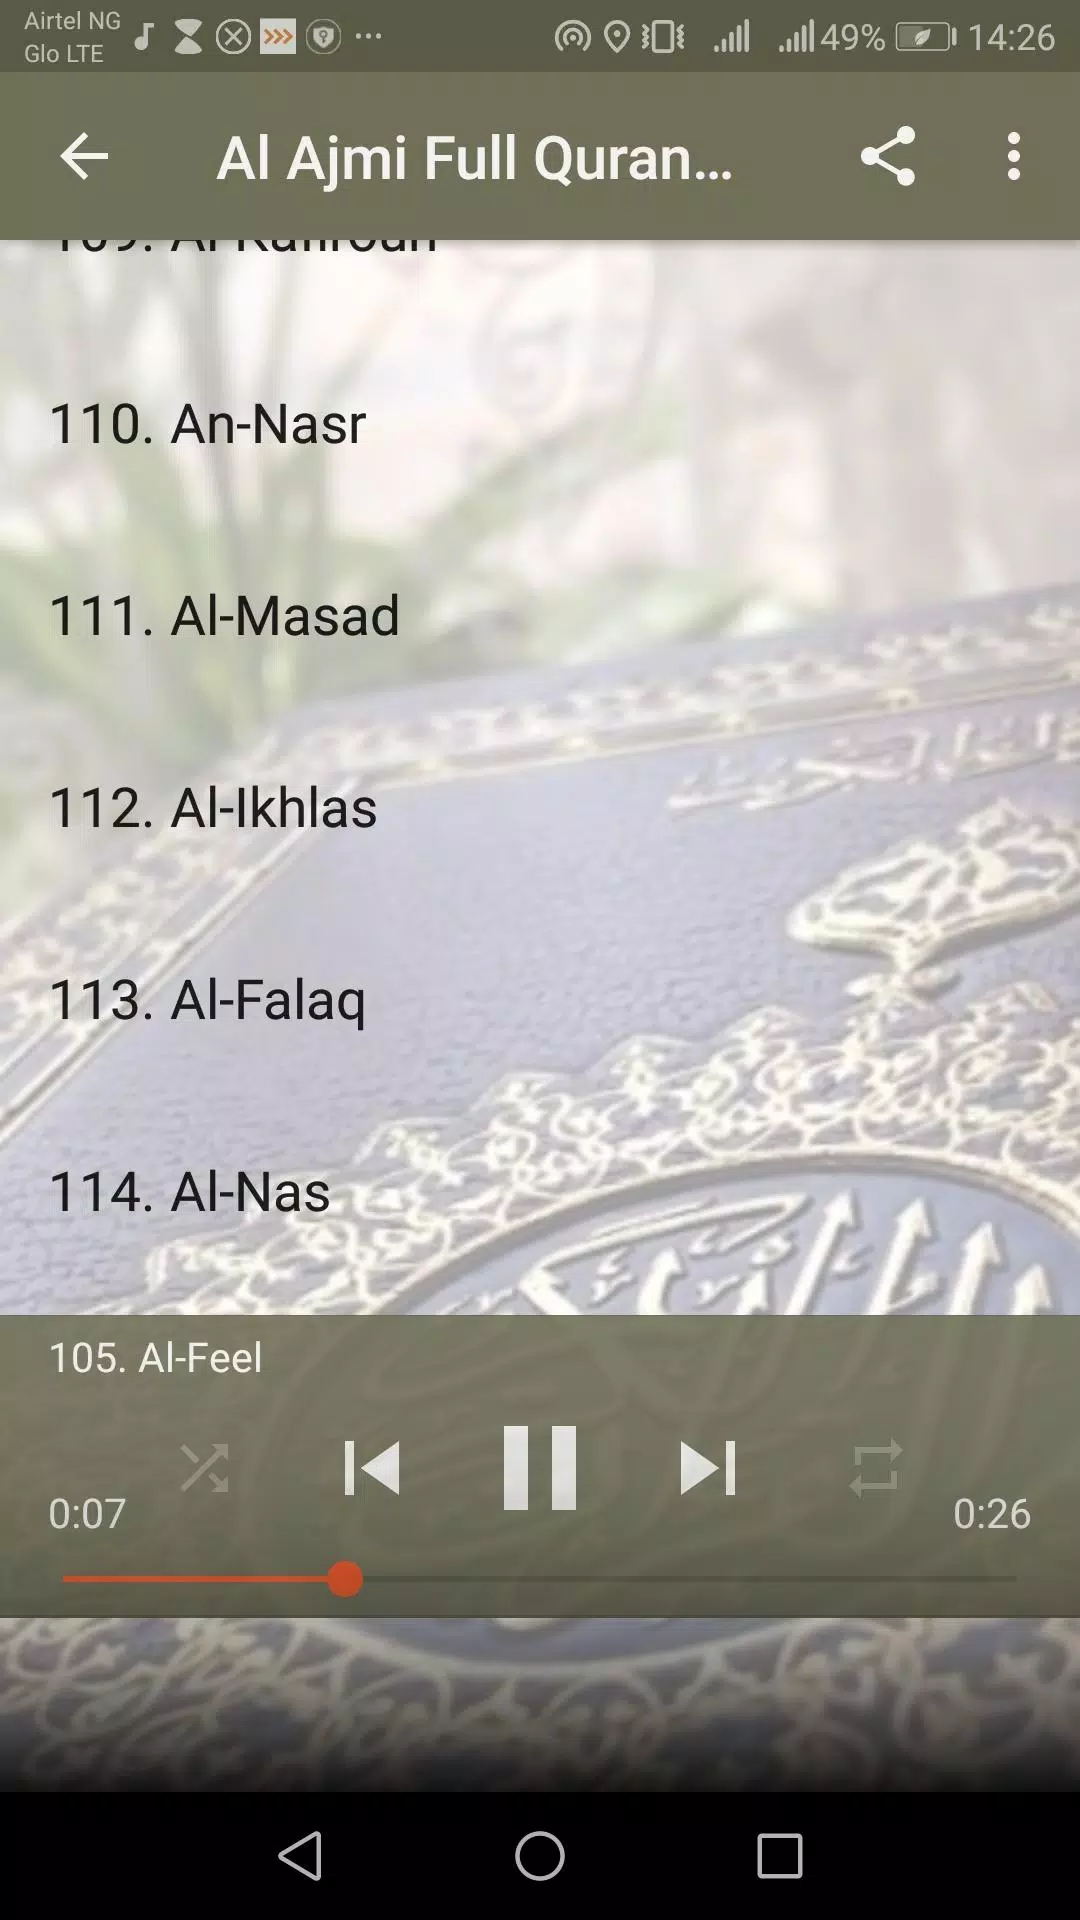 Sheikh Ahmed Al Ajmi Full Quran MP3 Offline APK for Android Download